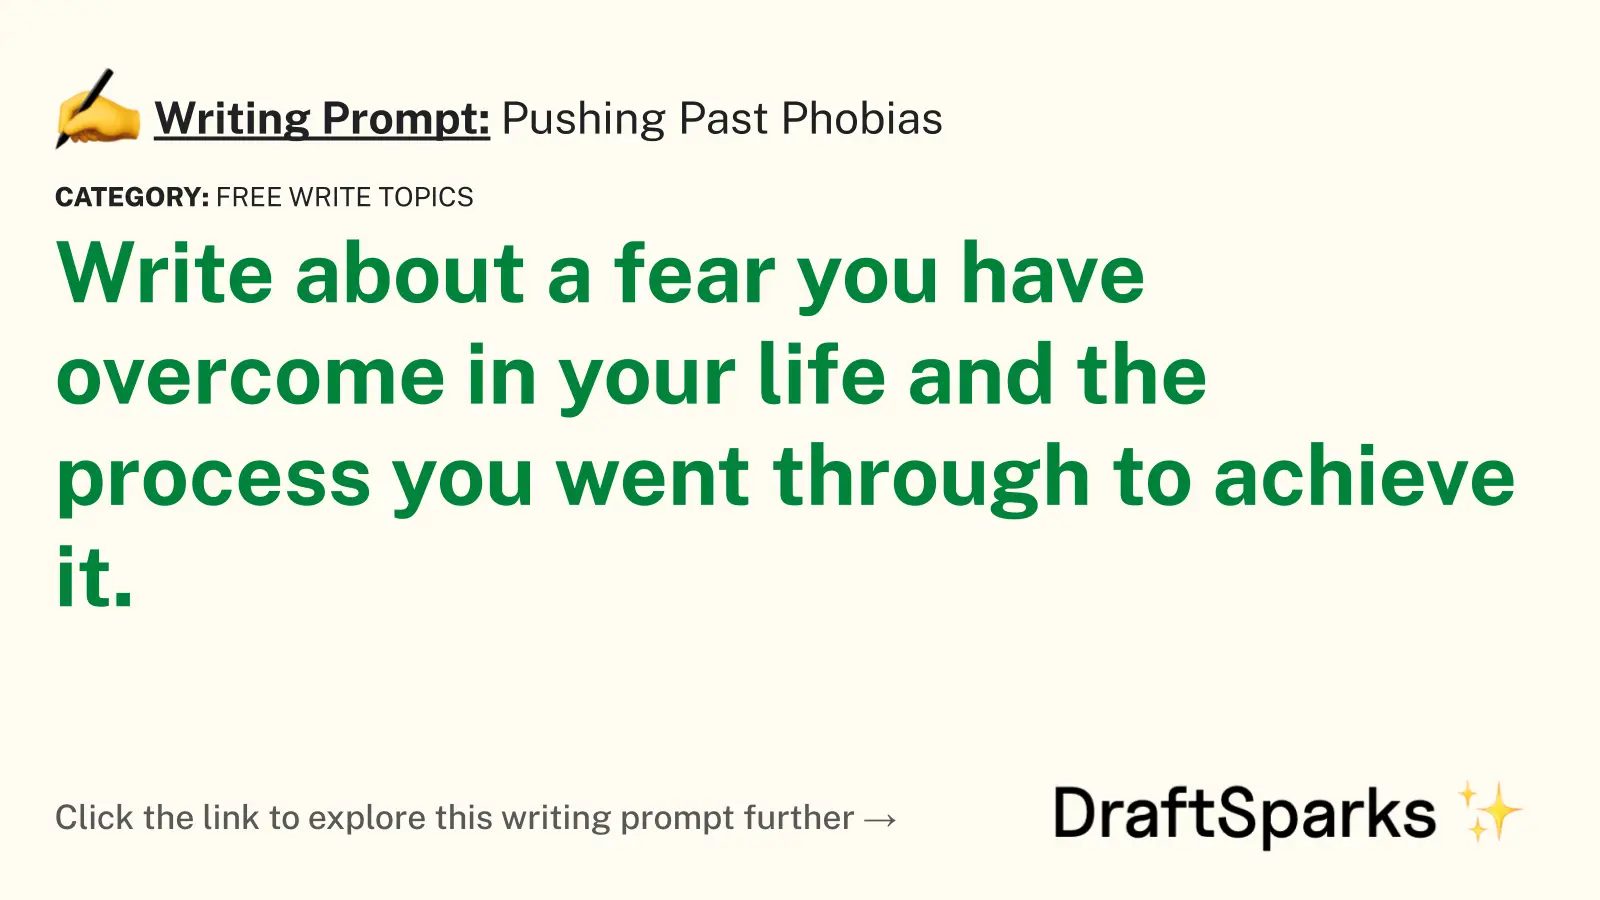 Pushing Past Phobias